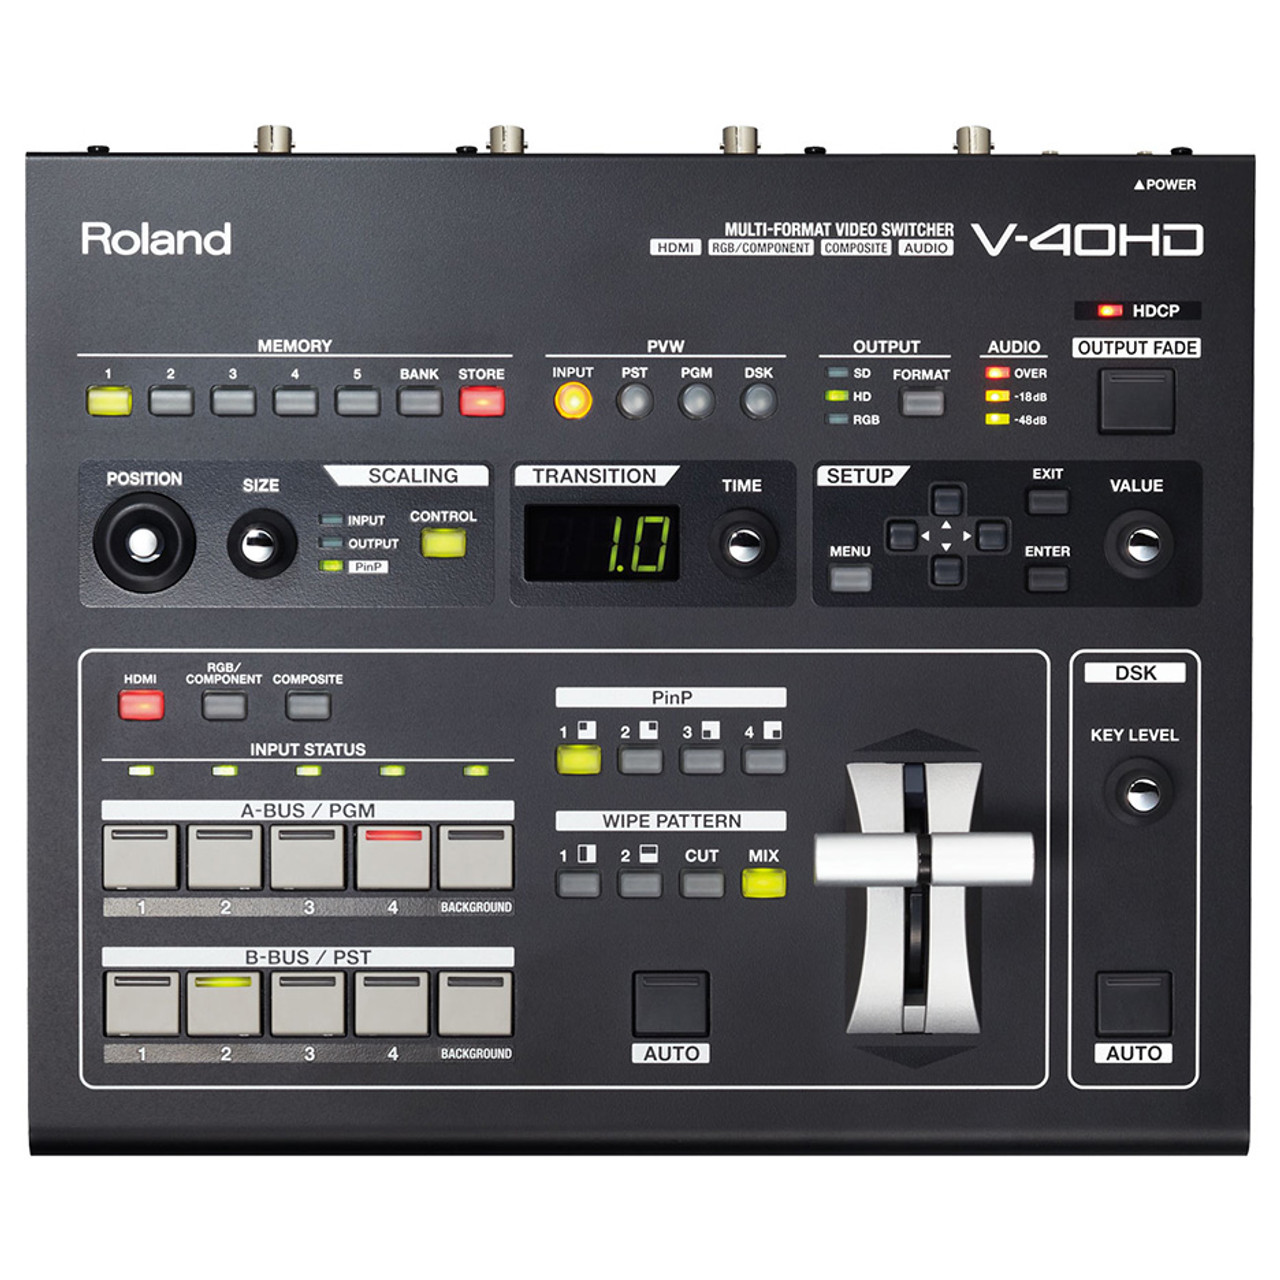 ROLAND V-40HD Multi-Format Video Switcher - 4 channel | EMI Audio